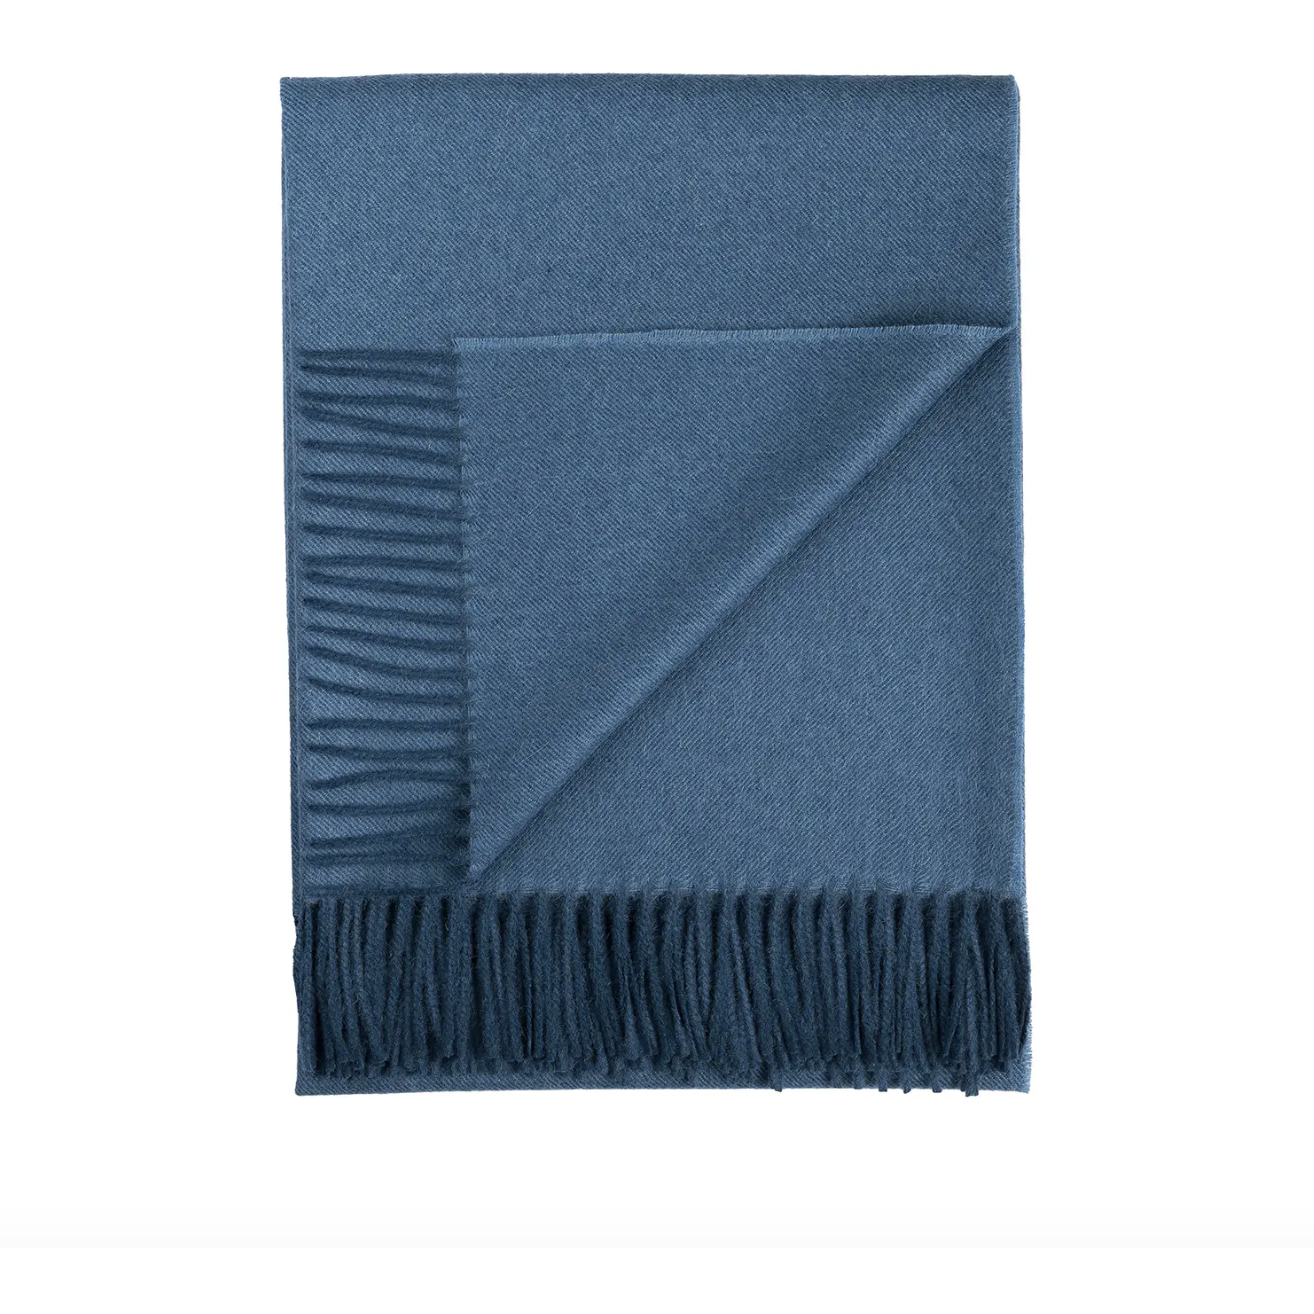 100% Baby Alpaca Throw Blanket- Blue Jean